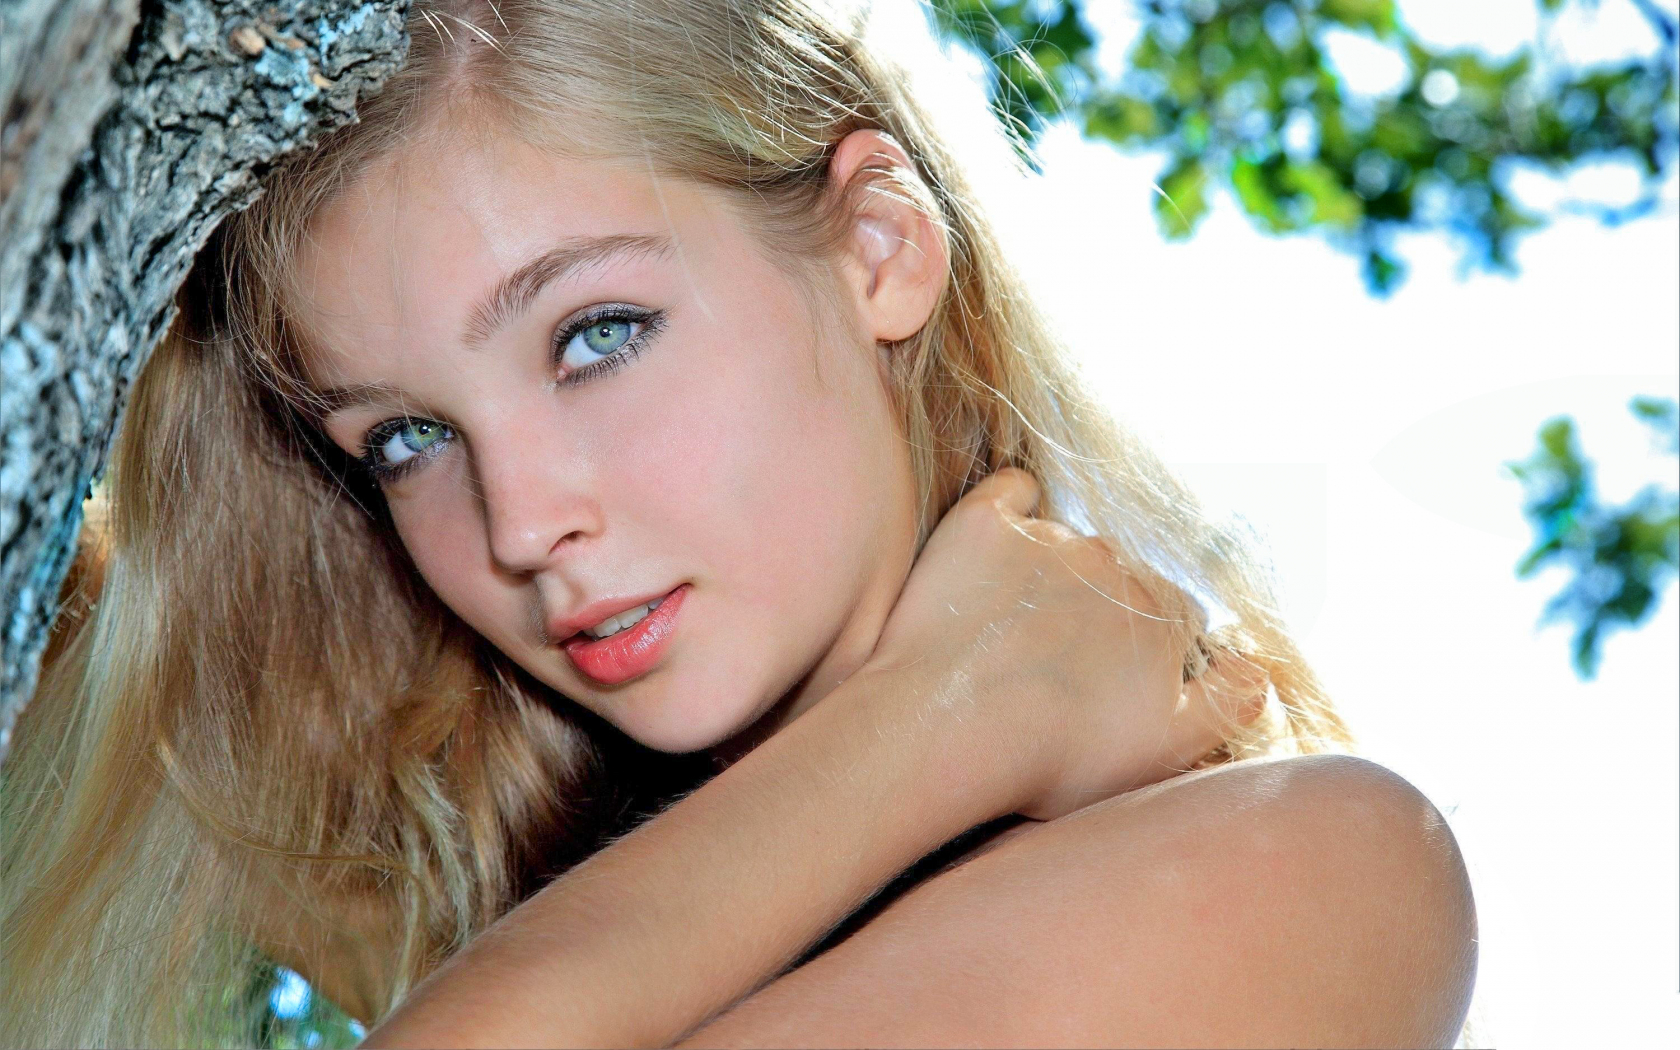 Blonde pussy models teens free, sexypattycake american beauty